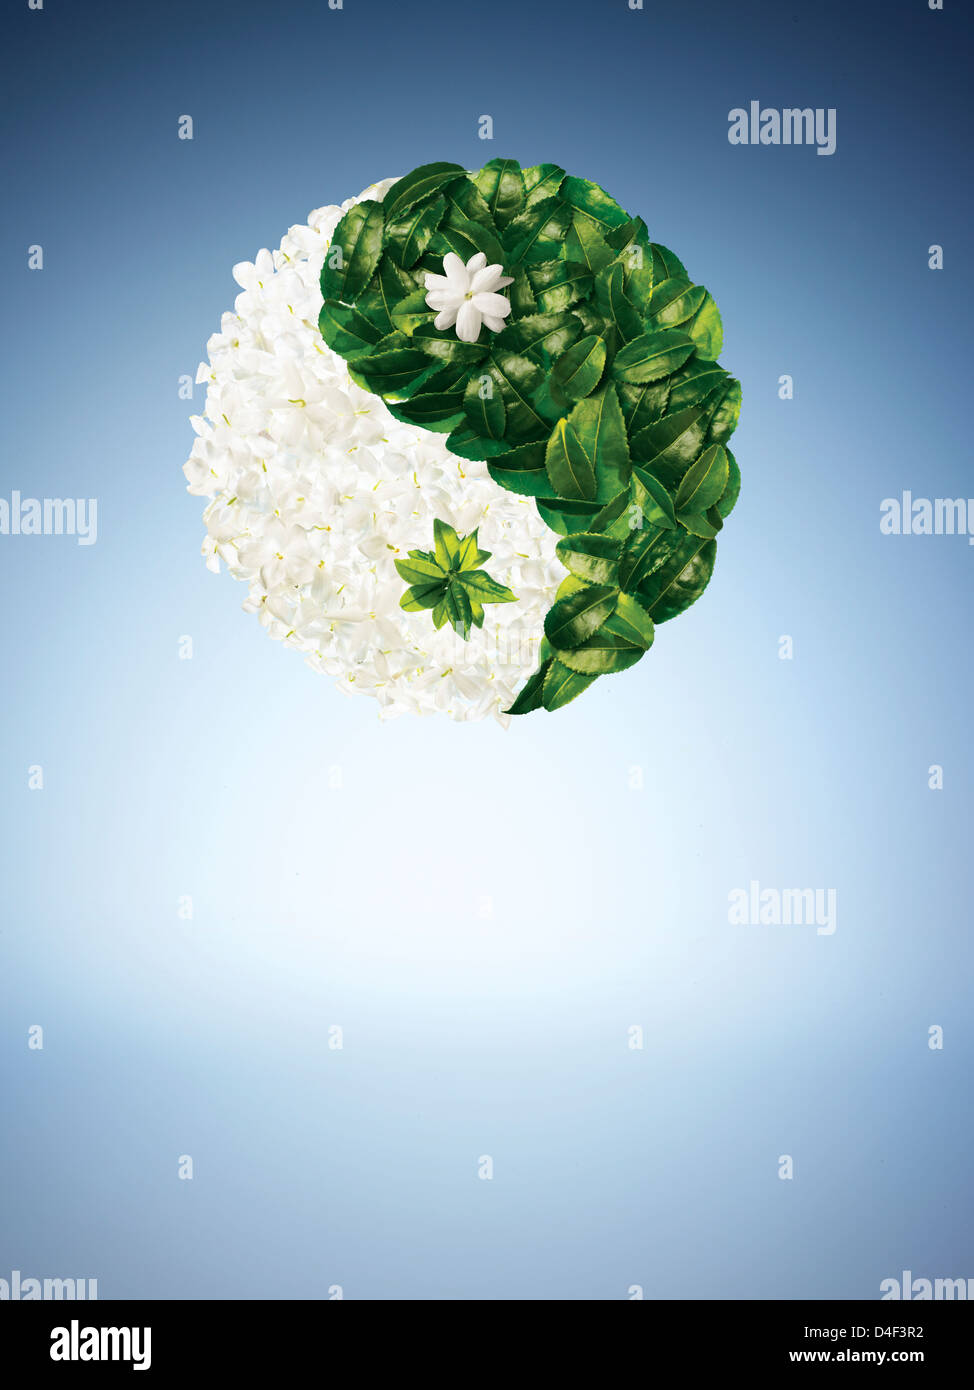 Illustration of leaves in yin yang shape Stock Photo